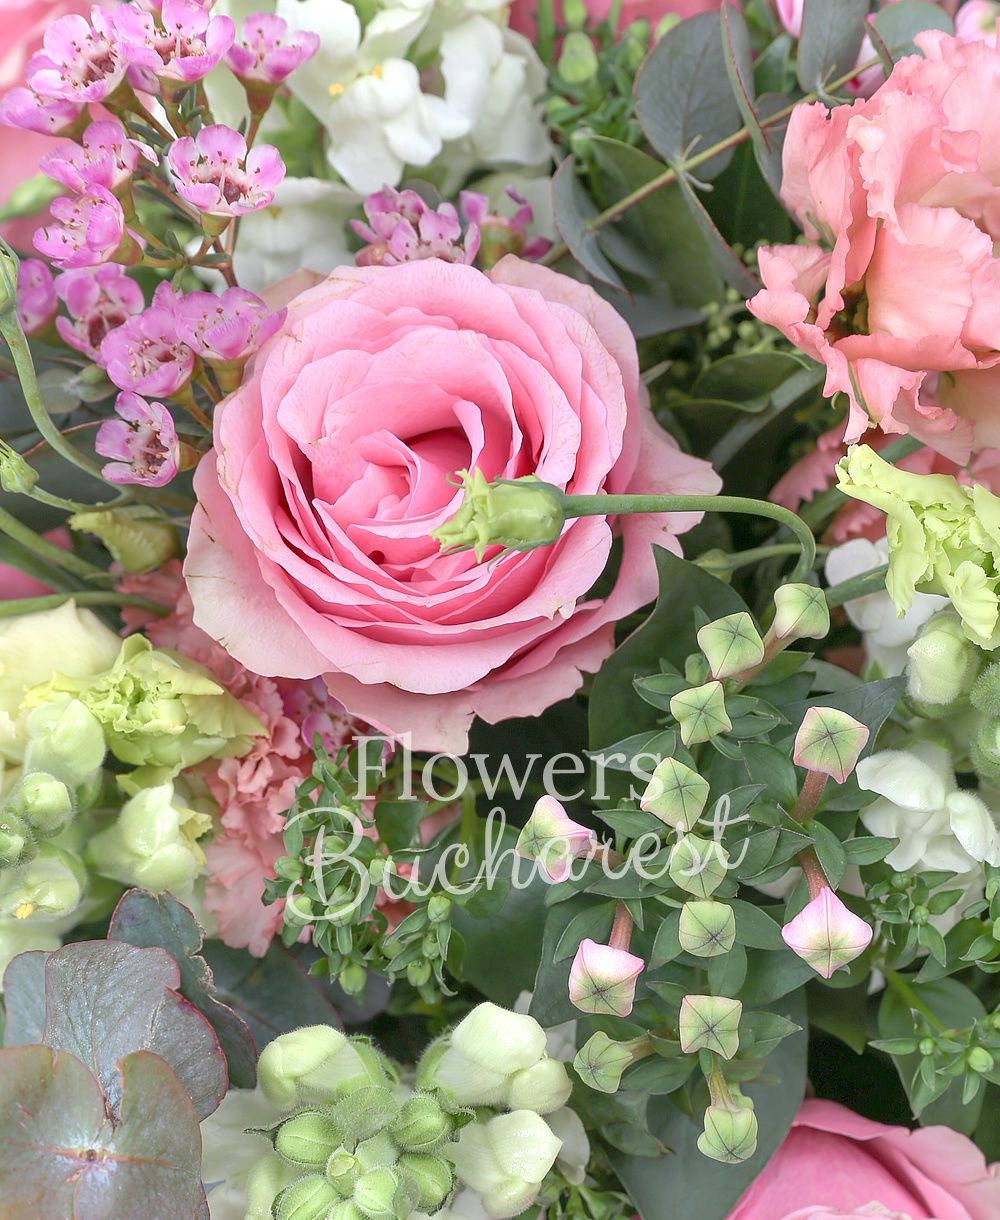 11 pink roses, 5 antirrhinum, 7 pink bouvardia, 5 pink lisianthus, waxflower, greenery